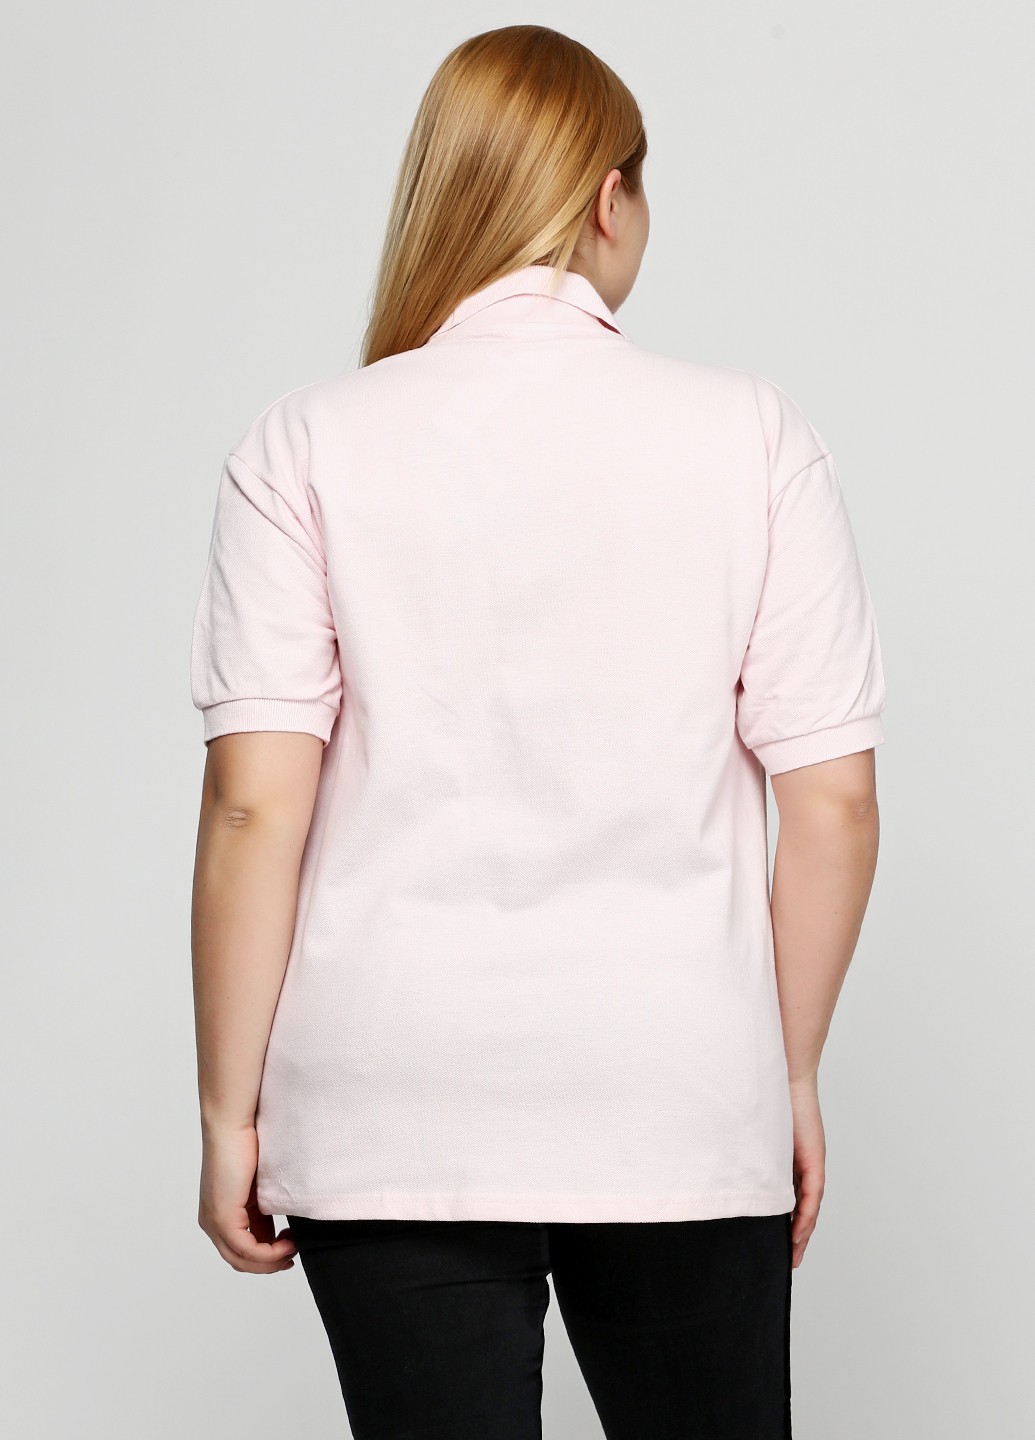 Бледно-розовая женская футболка-поло Cotton DeLuxe